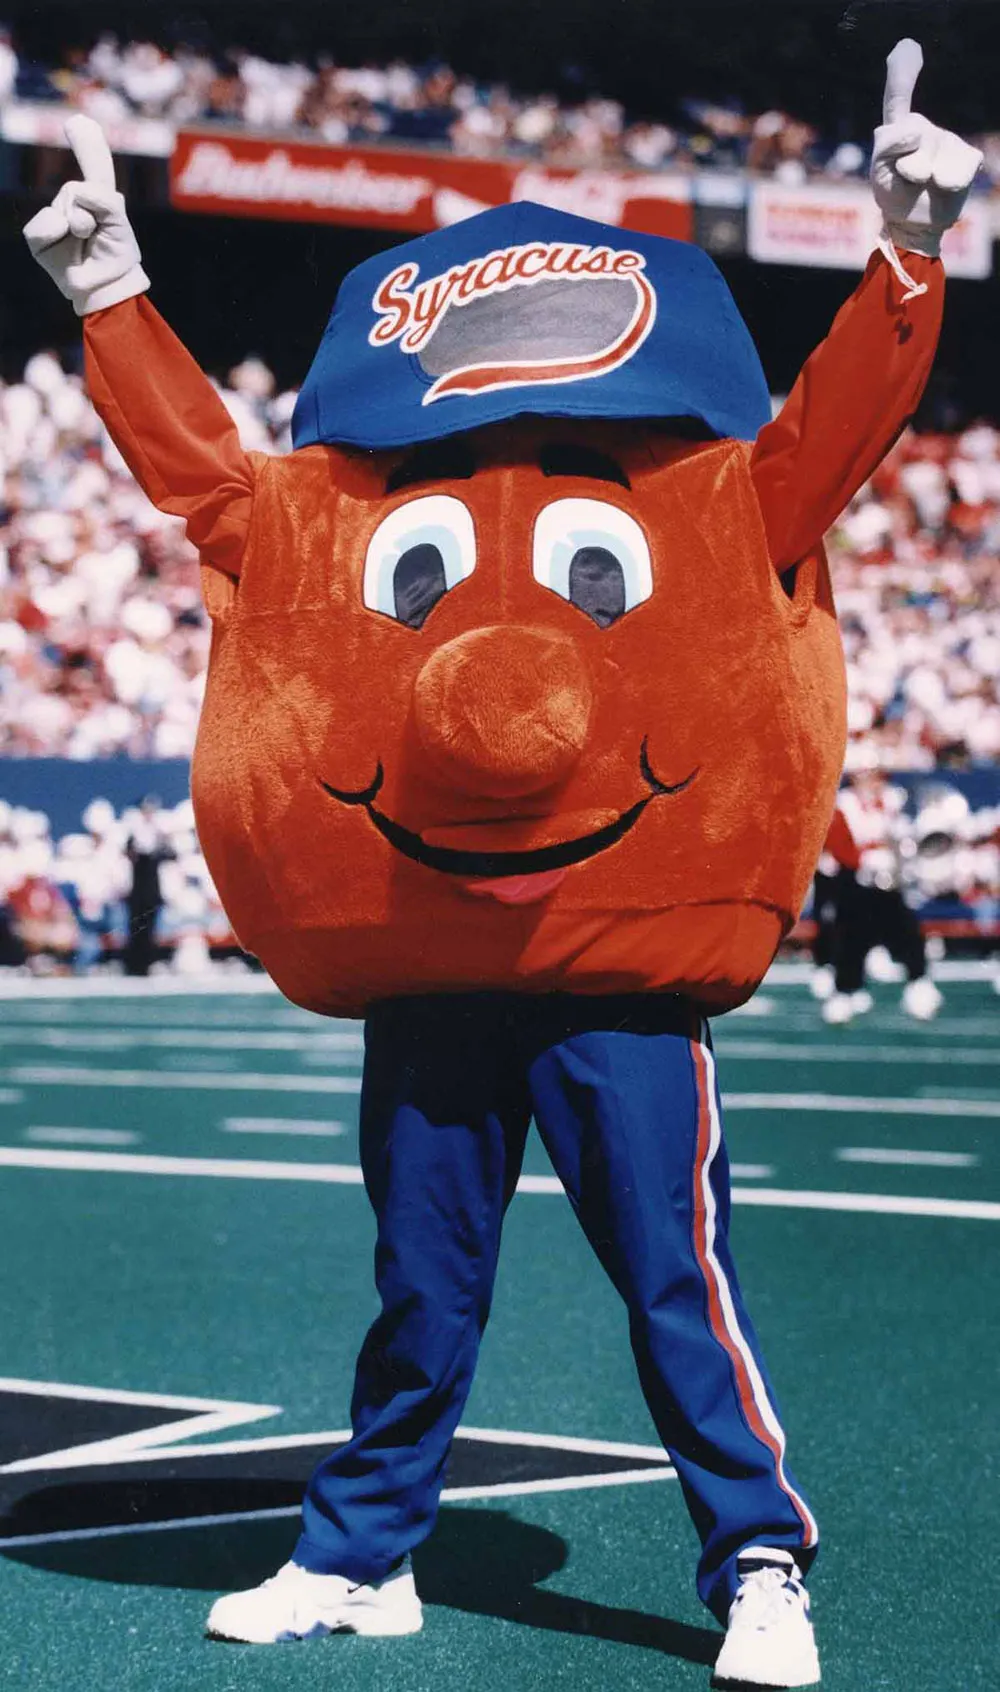 Vintage Otto the orange mascot cheering inside of stadium.